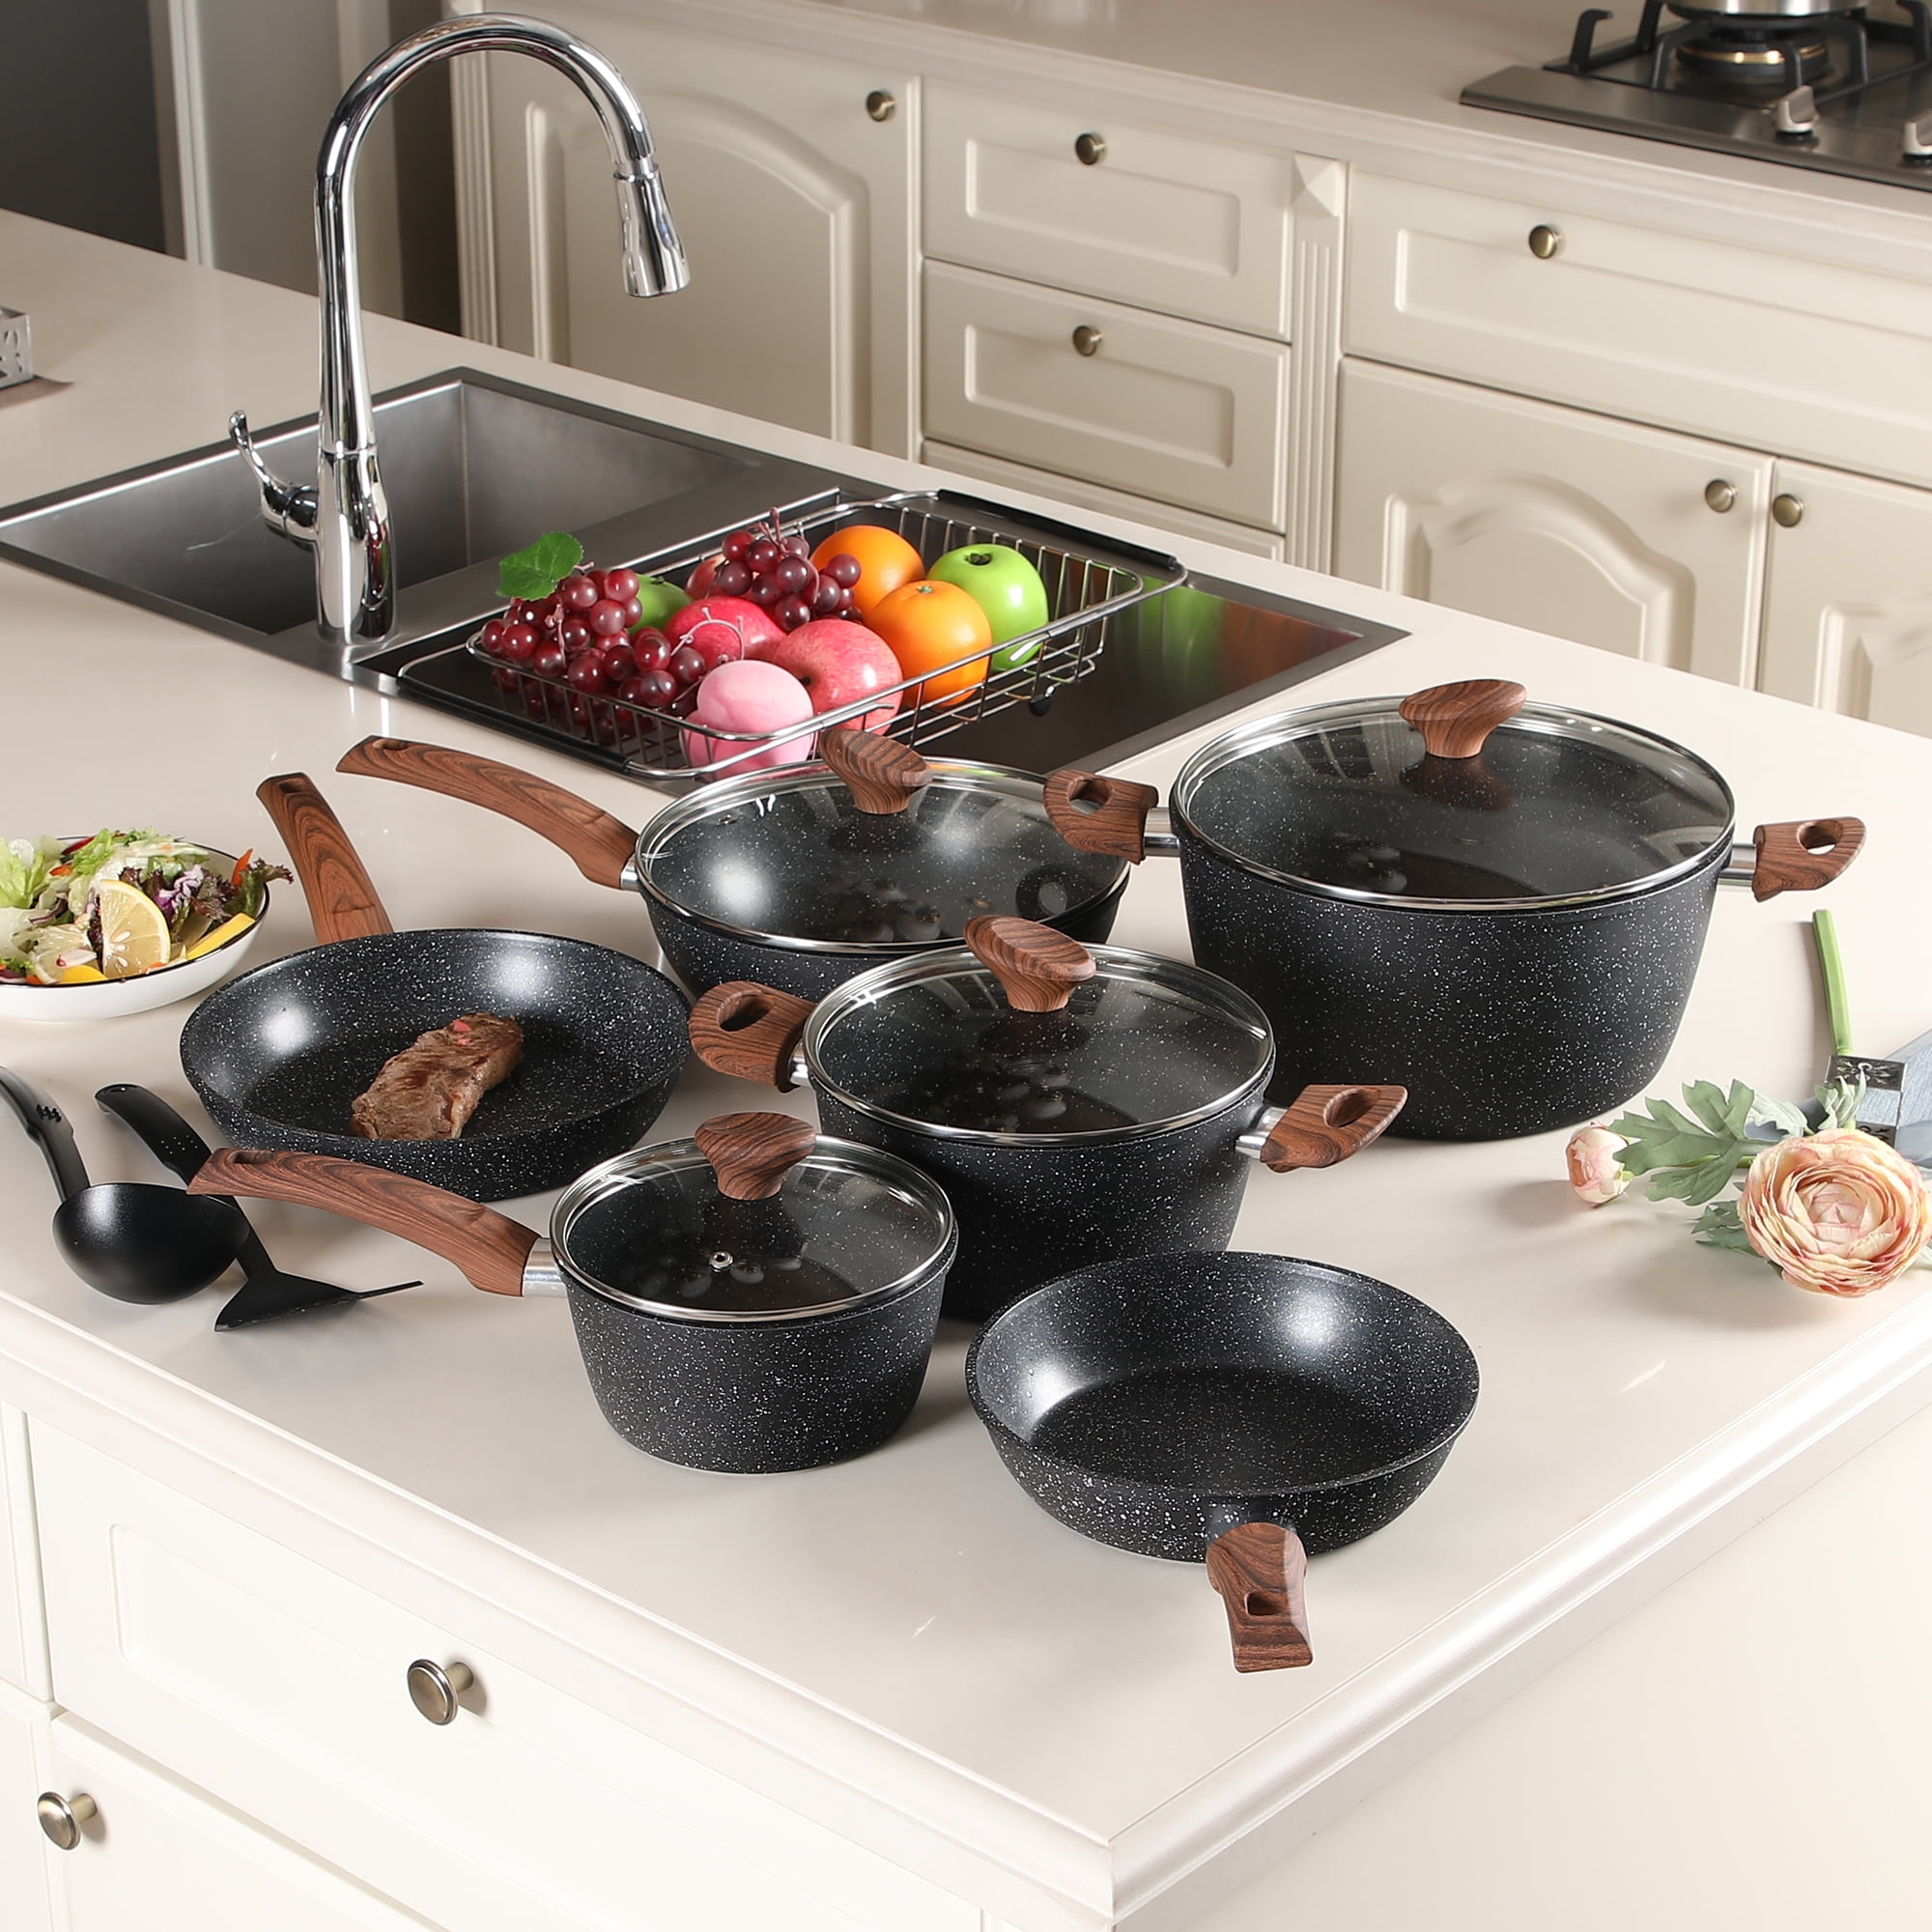 Kitchen Academy Detachable Handle Induction Cookware Sets - 10